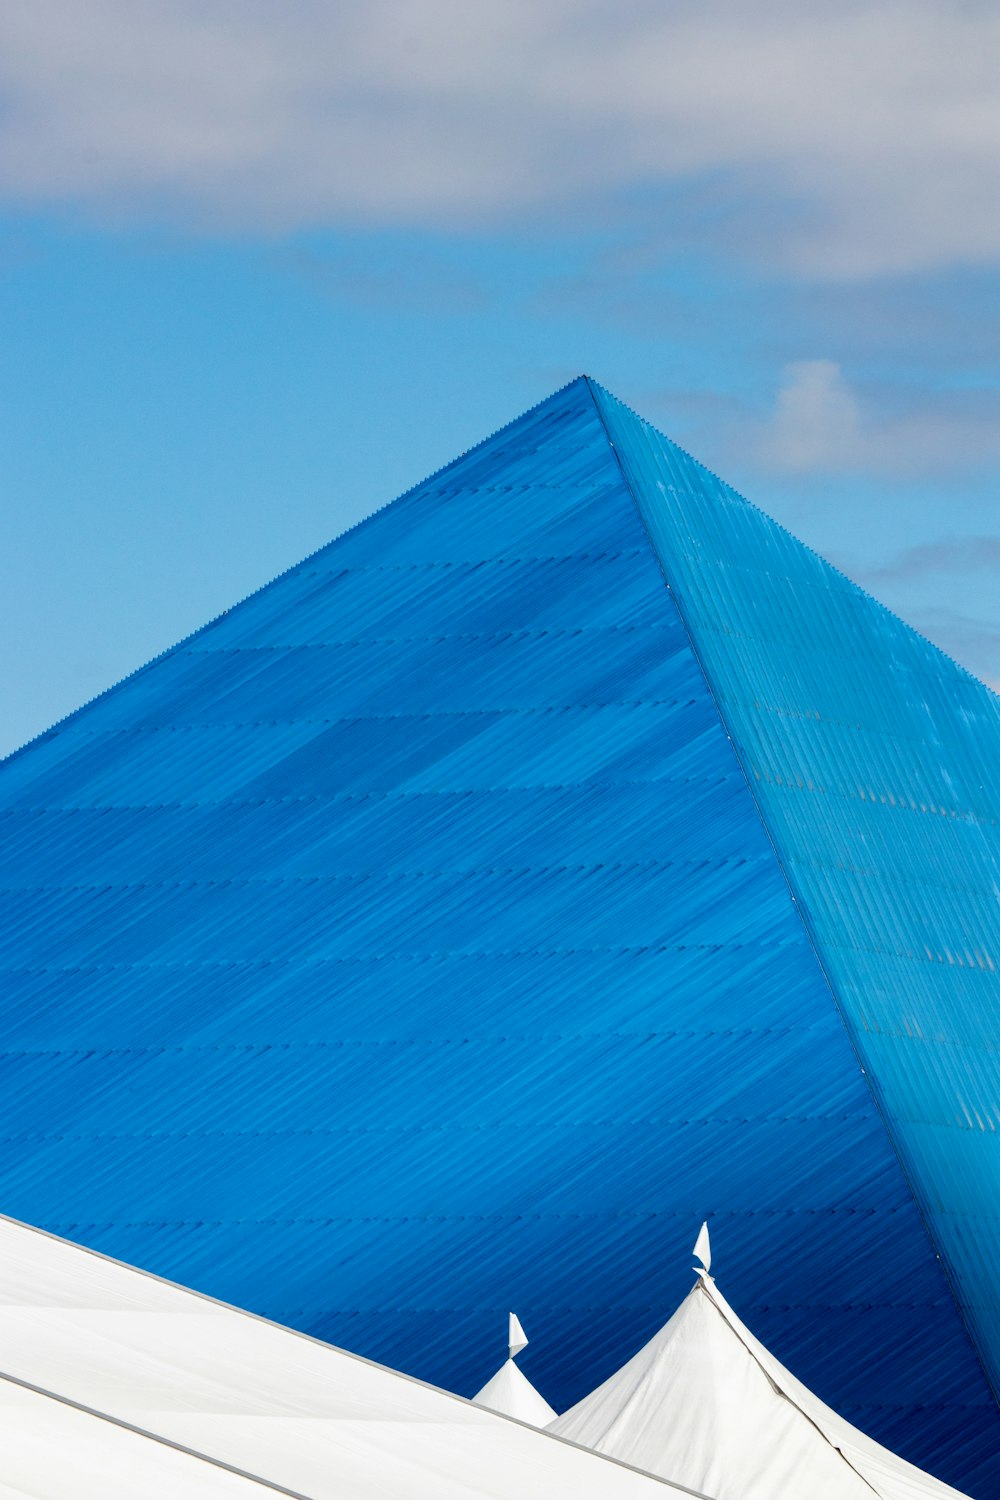 Marco da pirâmide azul